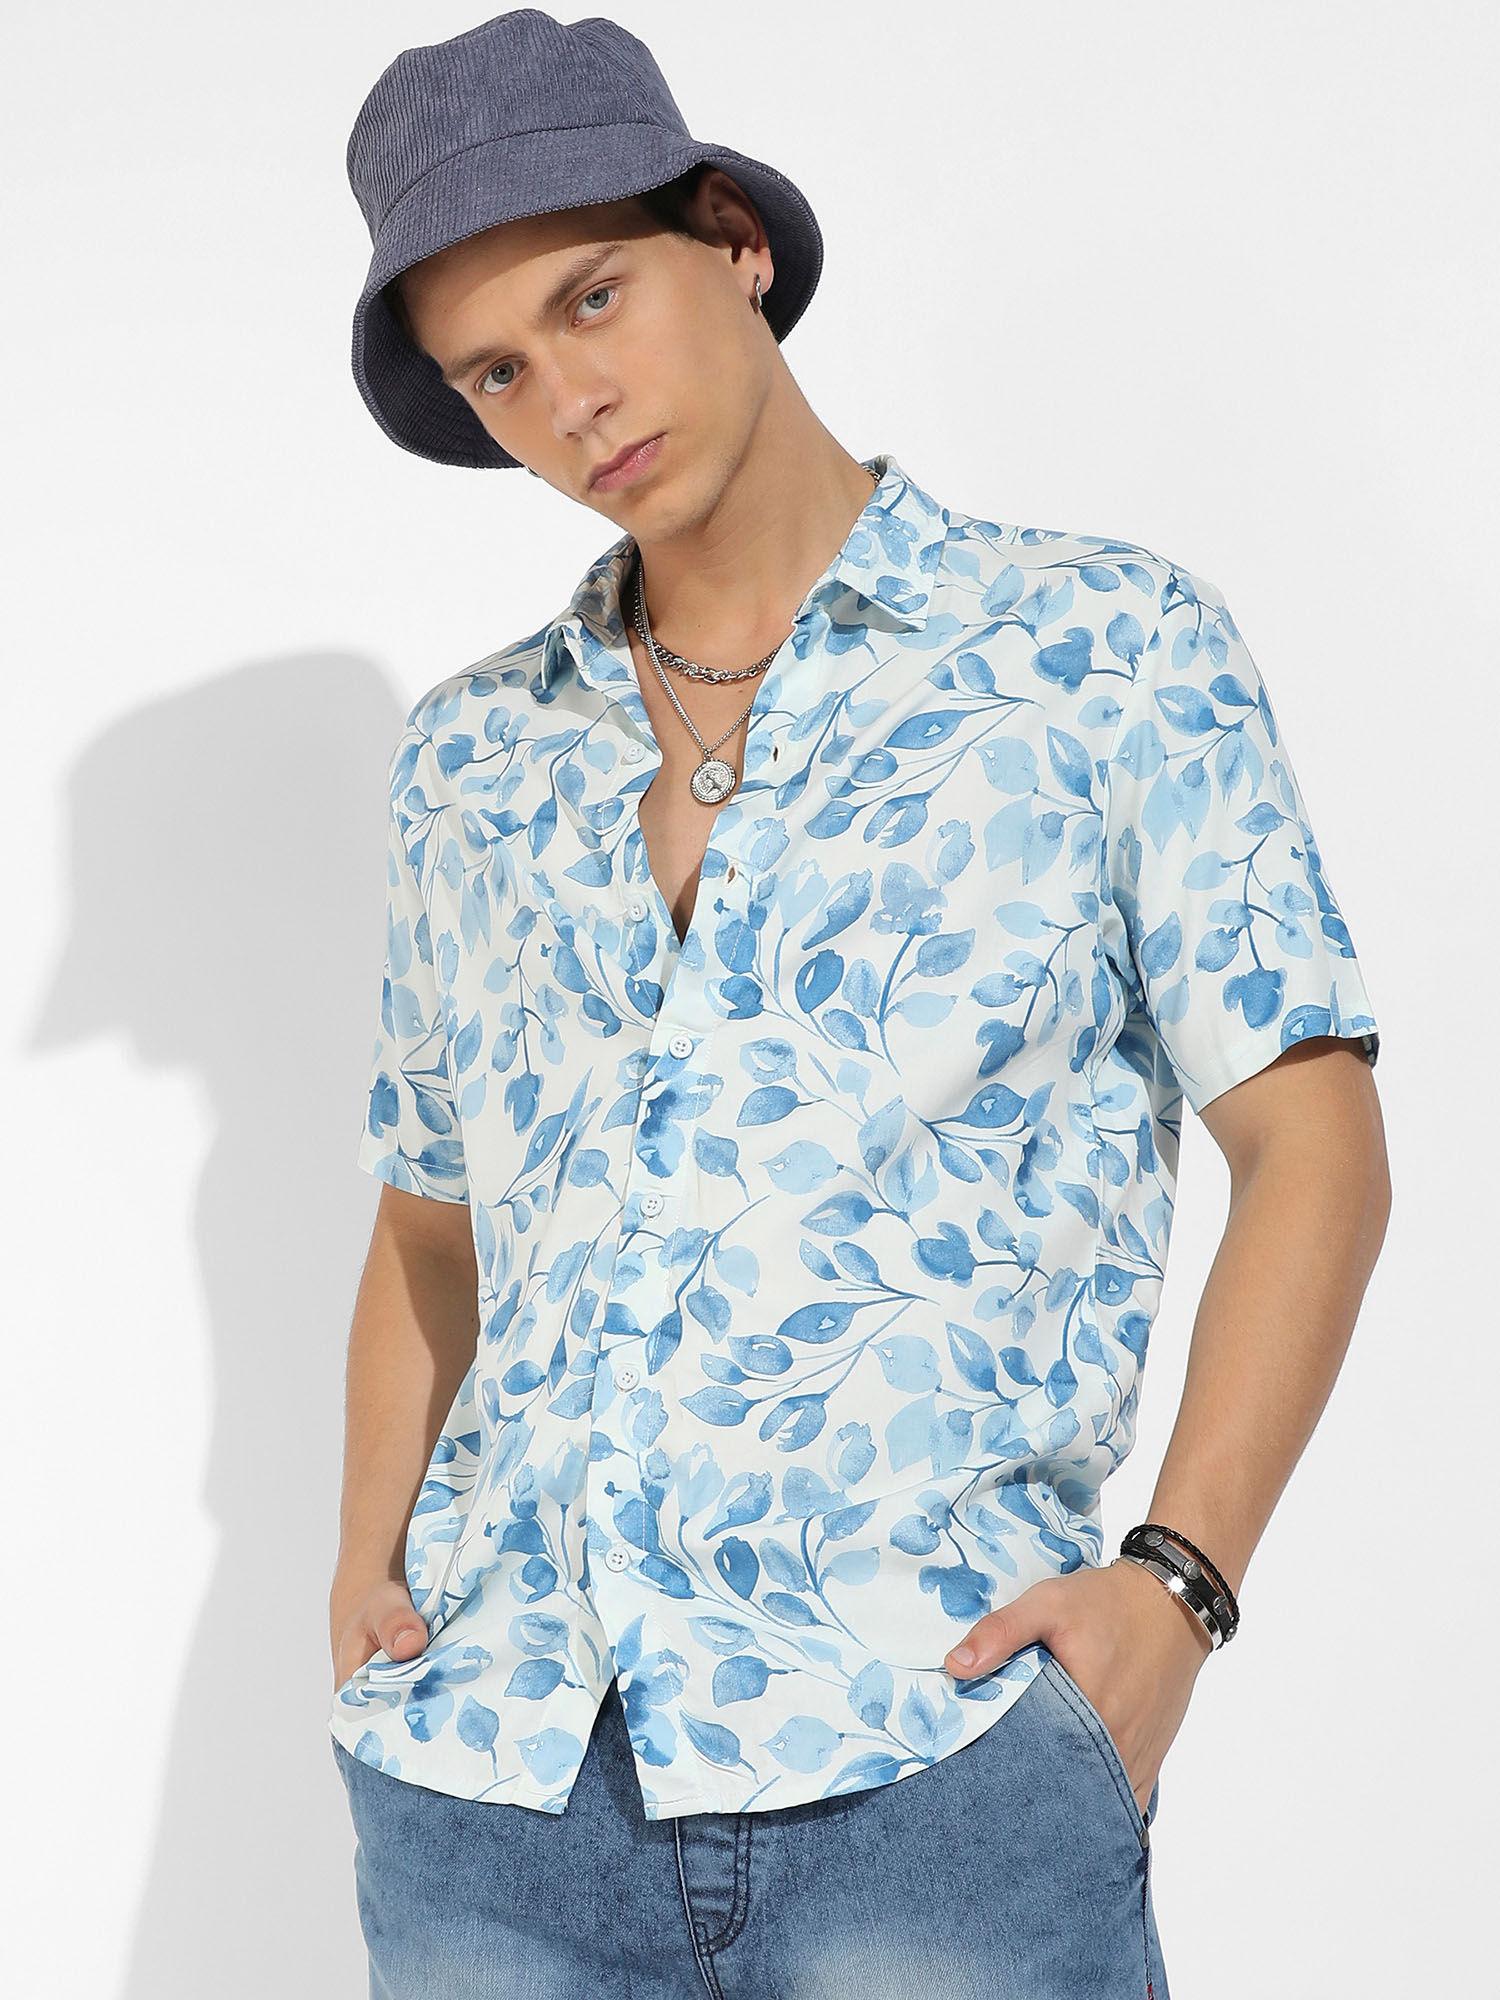 mens artistic foliage print button up shirt